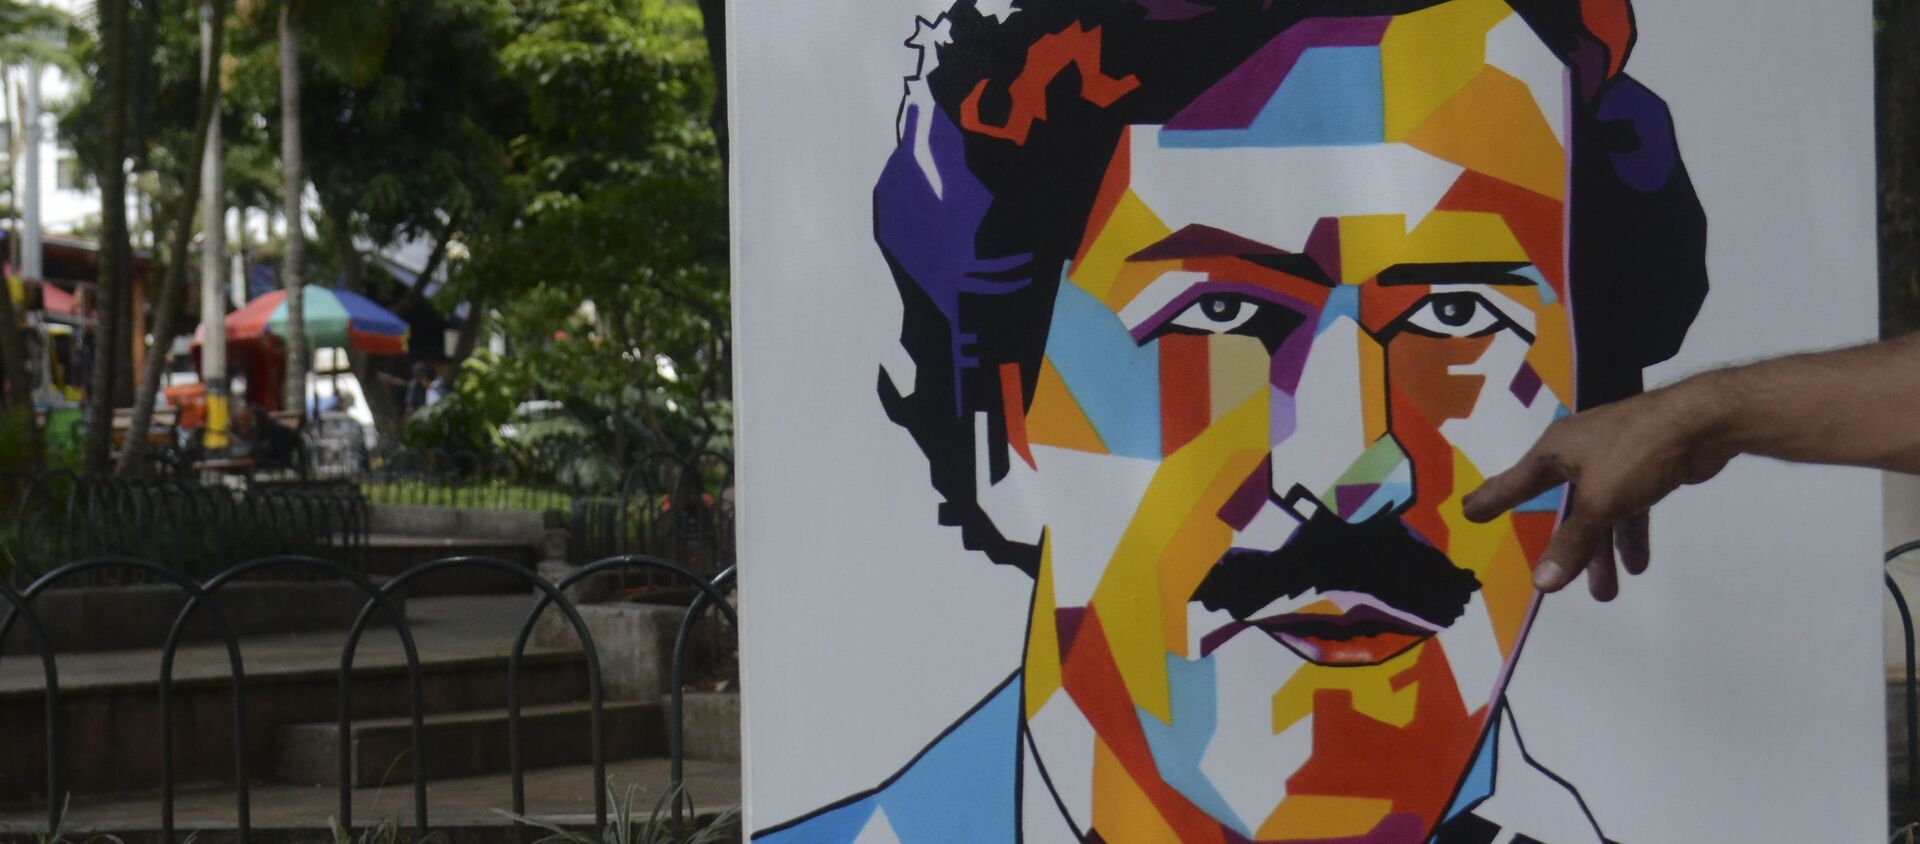 Paintings depicting late Colombian drug lord Pablo Escobar are on display at Lleras Park in Medellin - Sputnik International, 1920, 11.08.2019